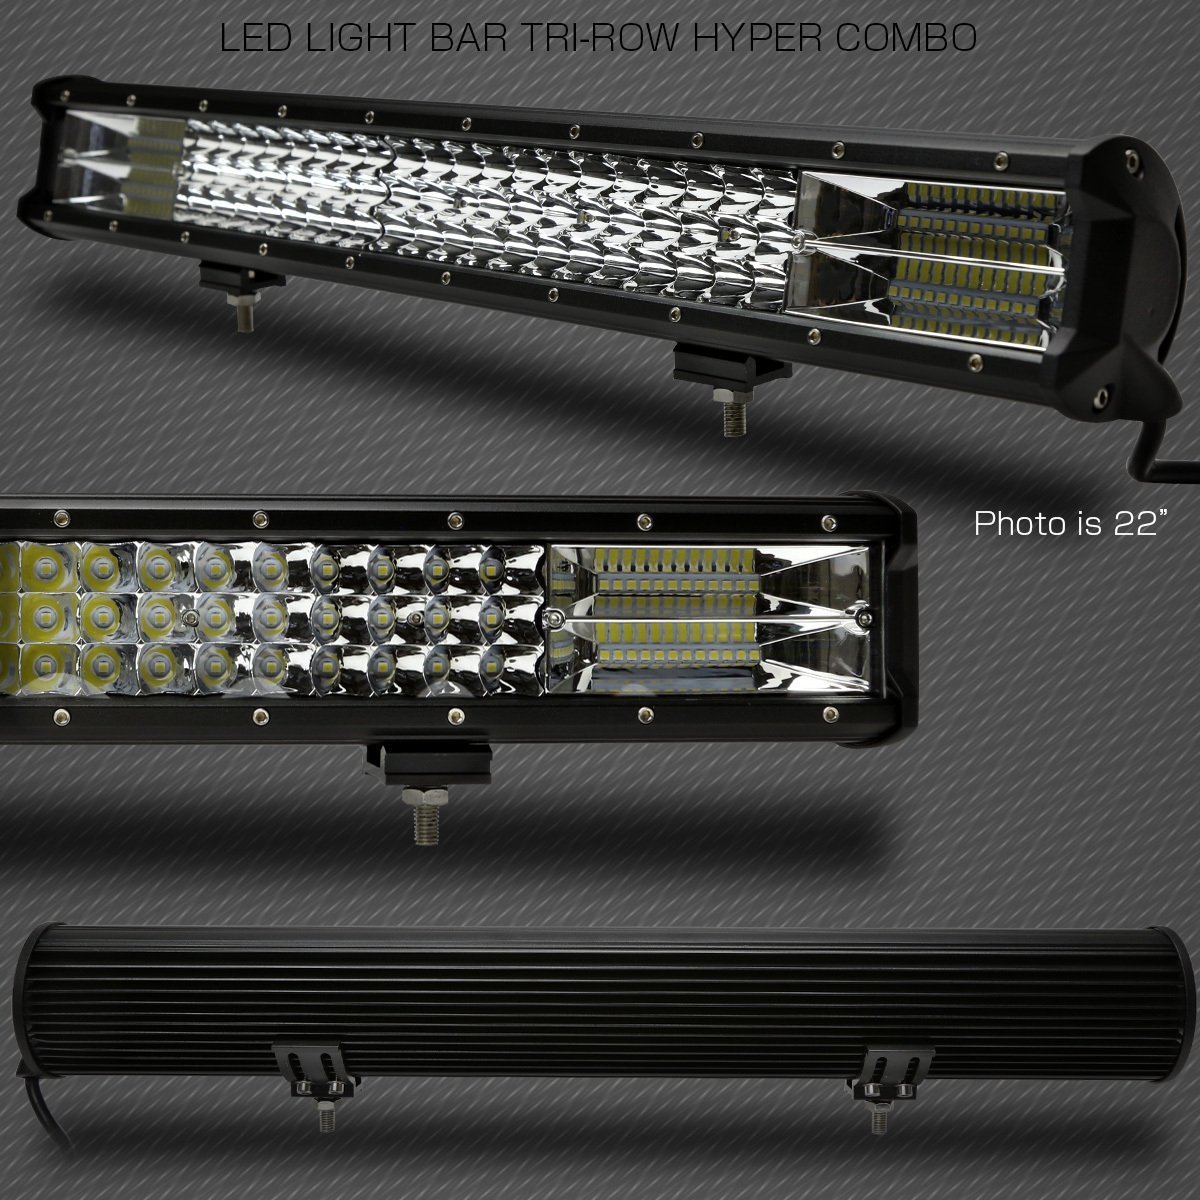 LED ライトバー 58.5cm 324W TRI-ROW ハイパーコンボ 23インチ 16200lm 12V 24V 対応 作業灯 ワークライト P-524_画像4